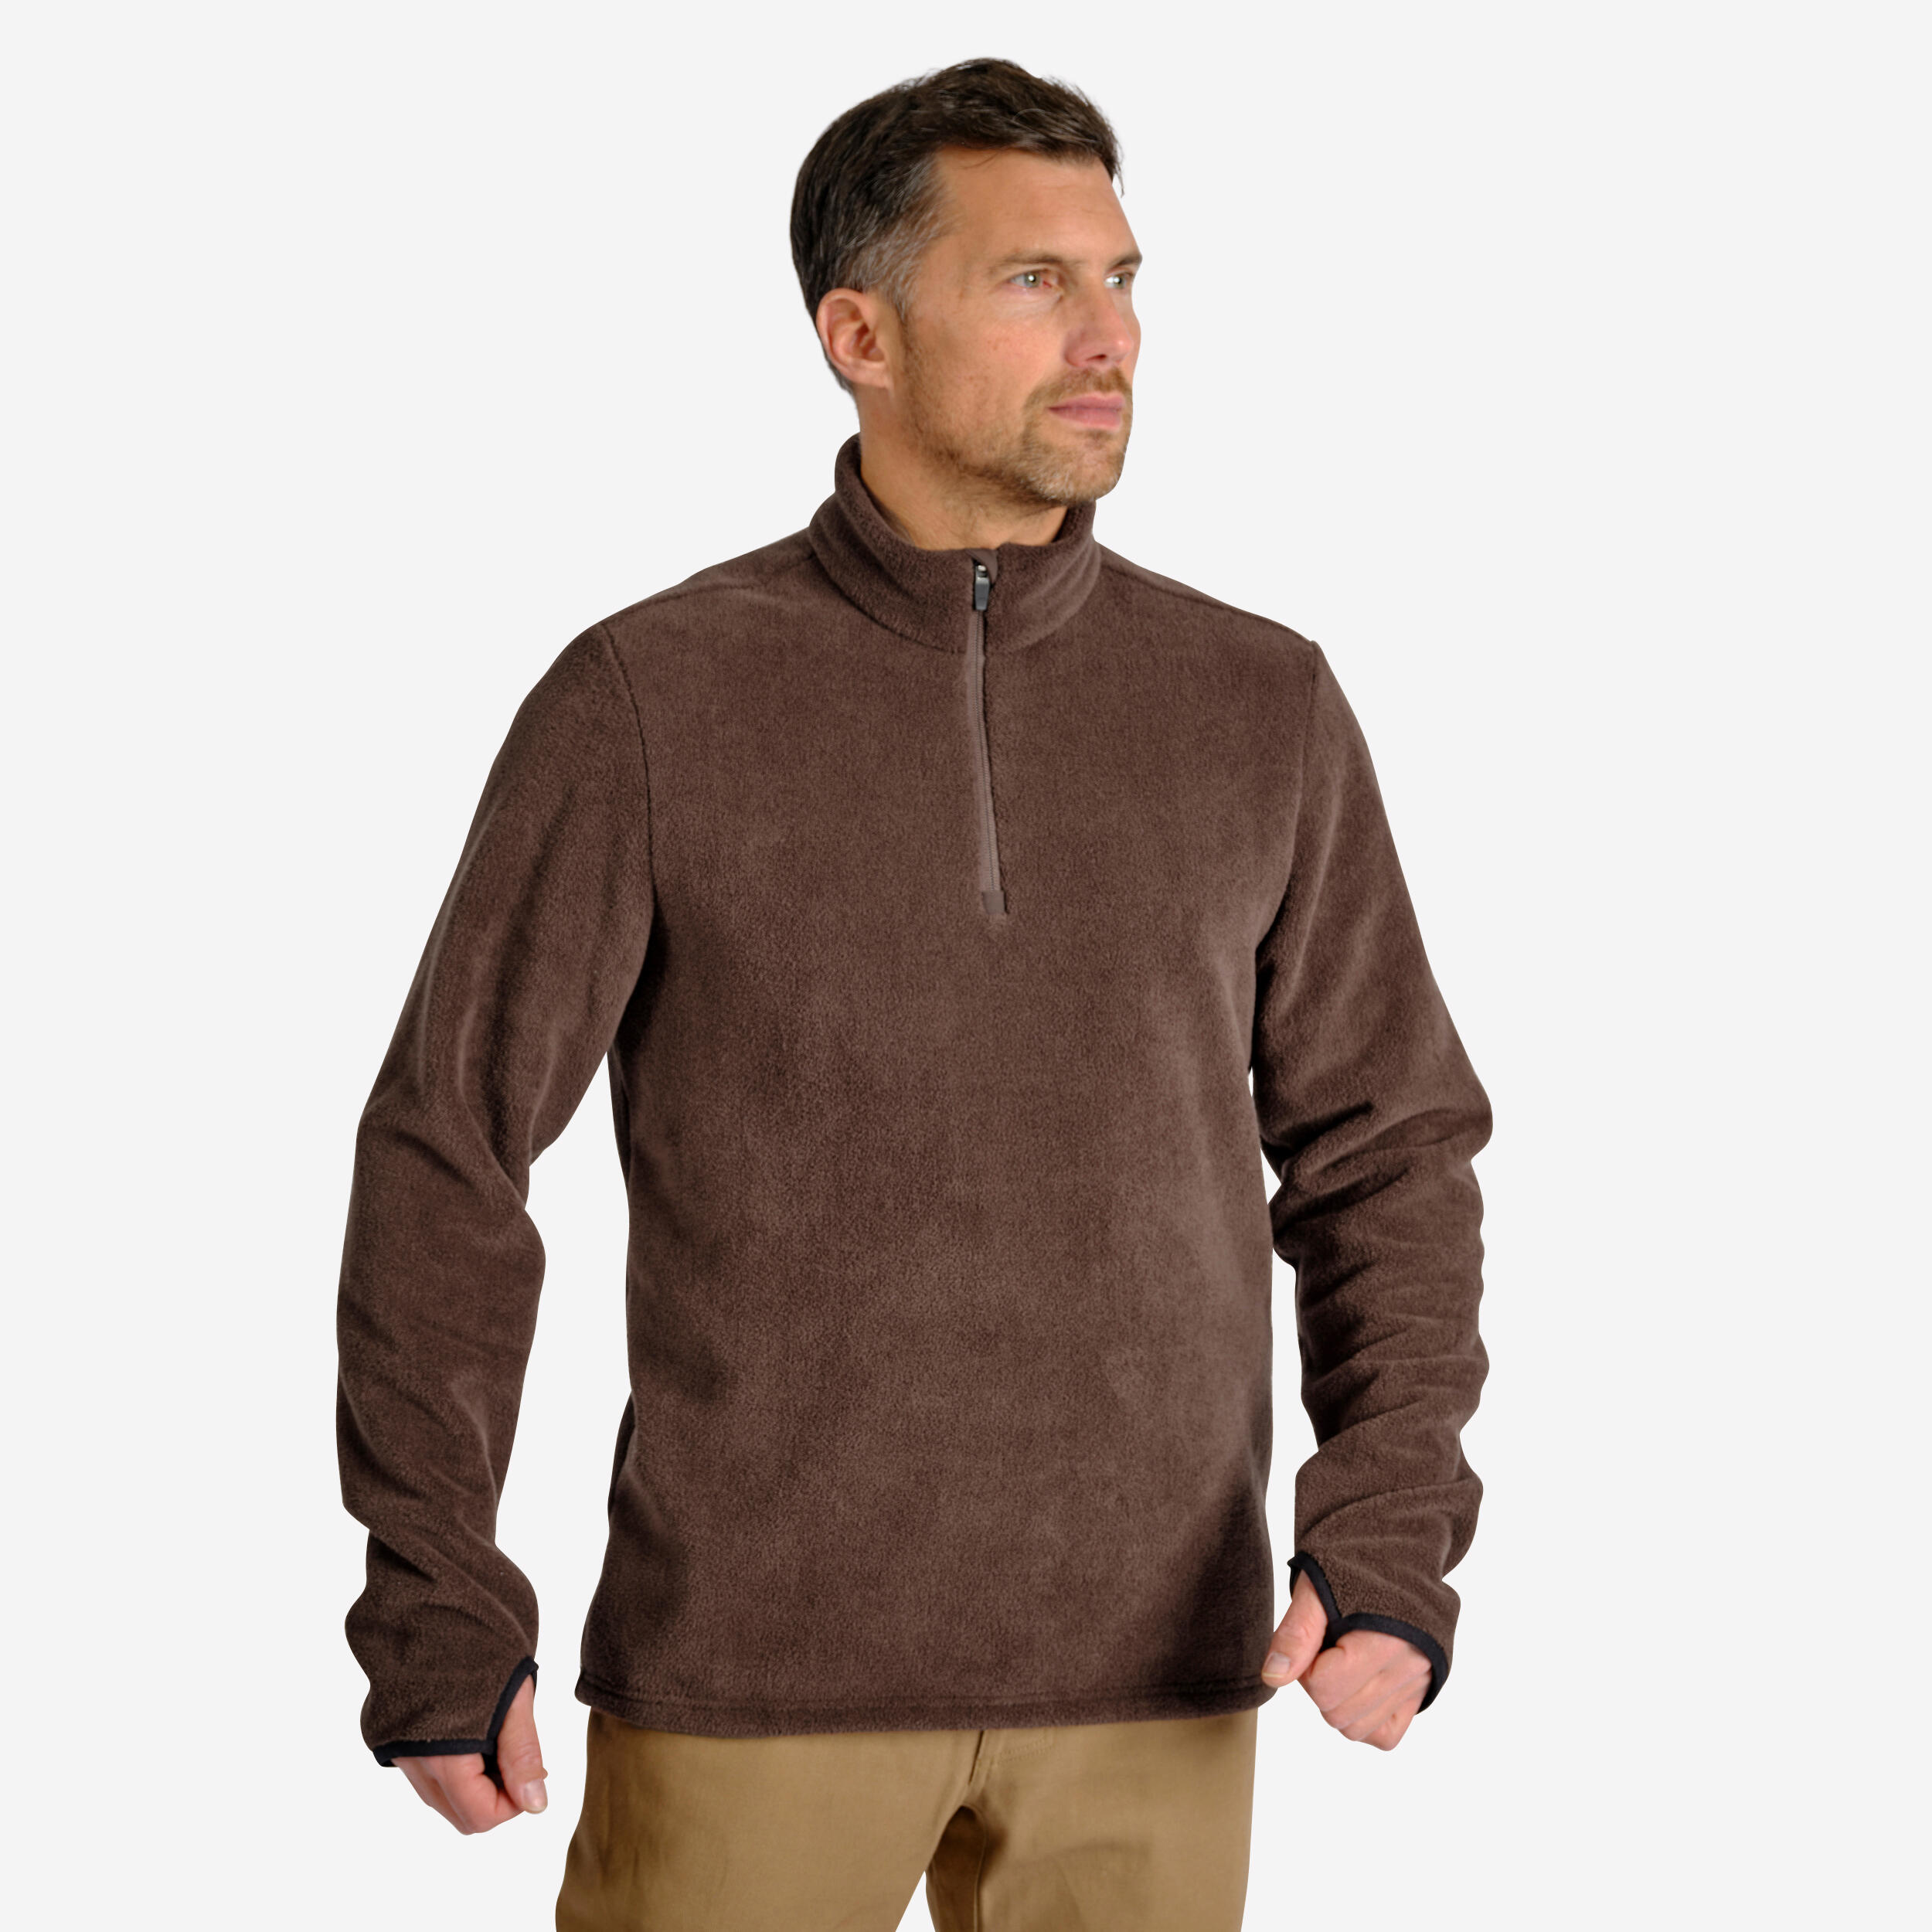 Men's Fleece Pullover - 500 Brown - Deep shale - Solognac - Decathlon